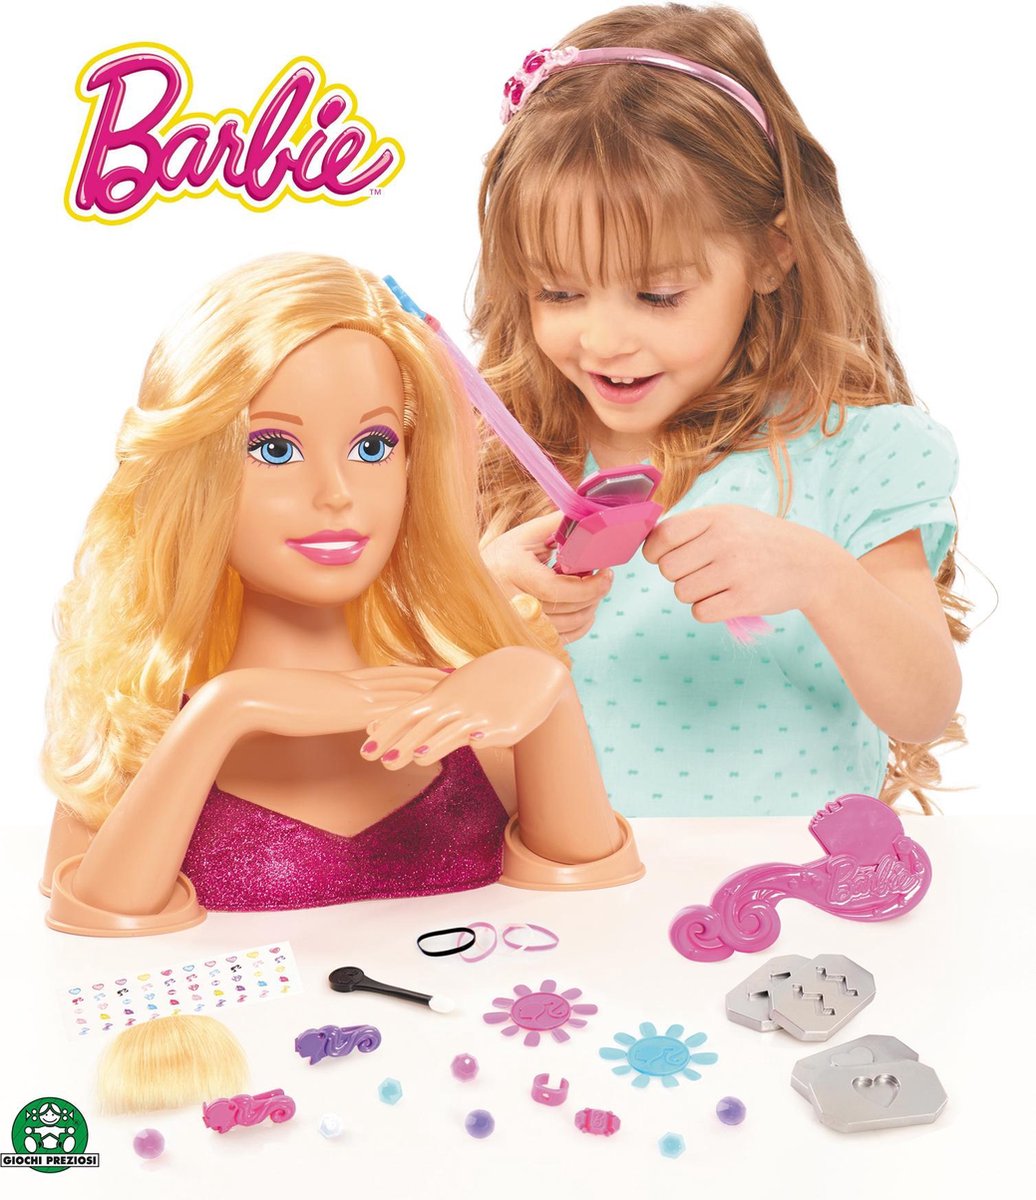 bol.com | Barbie - Kaphoofd